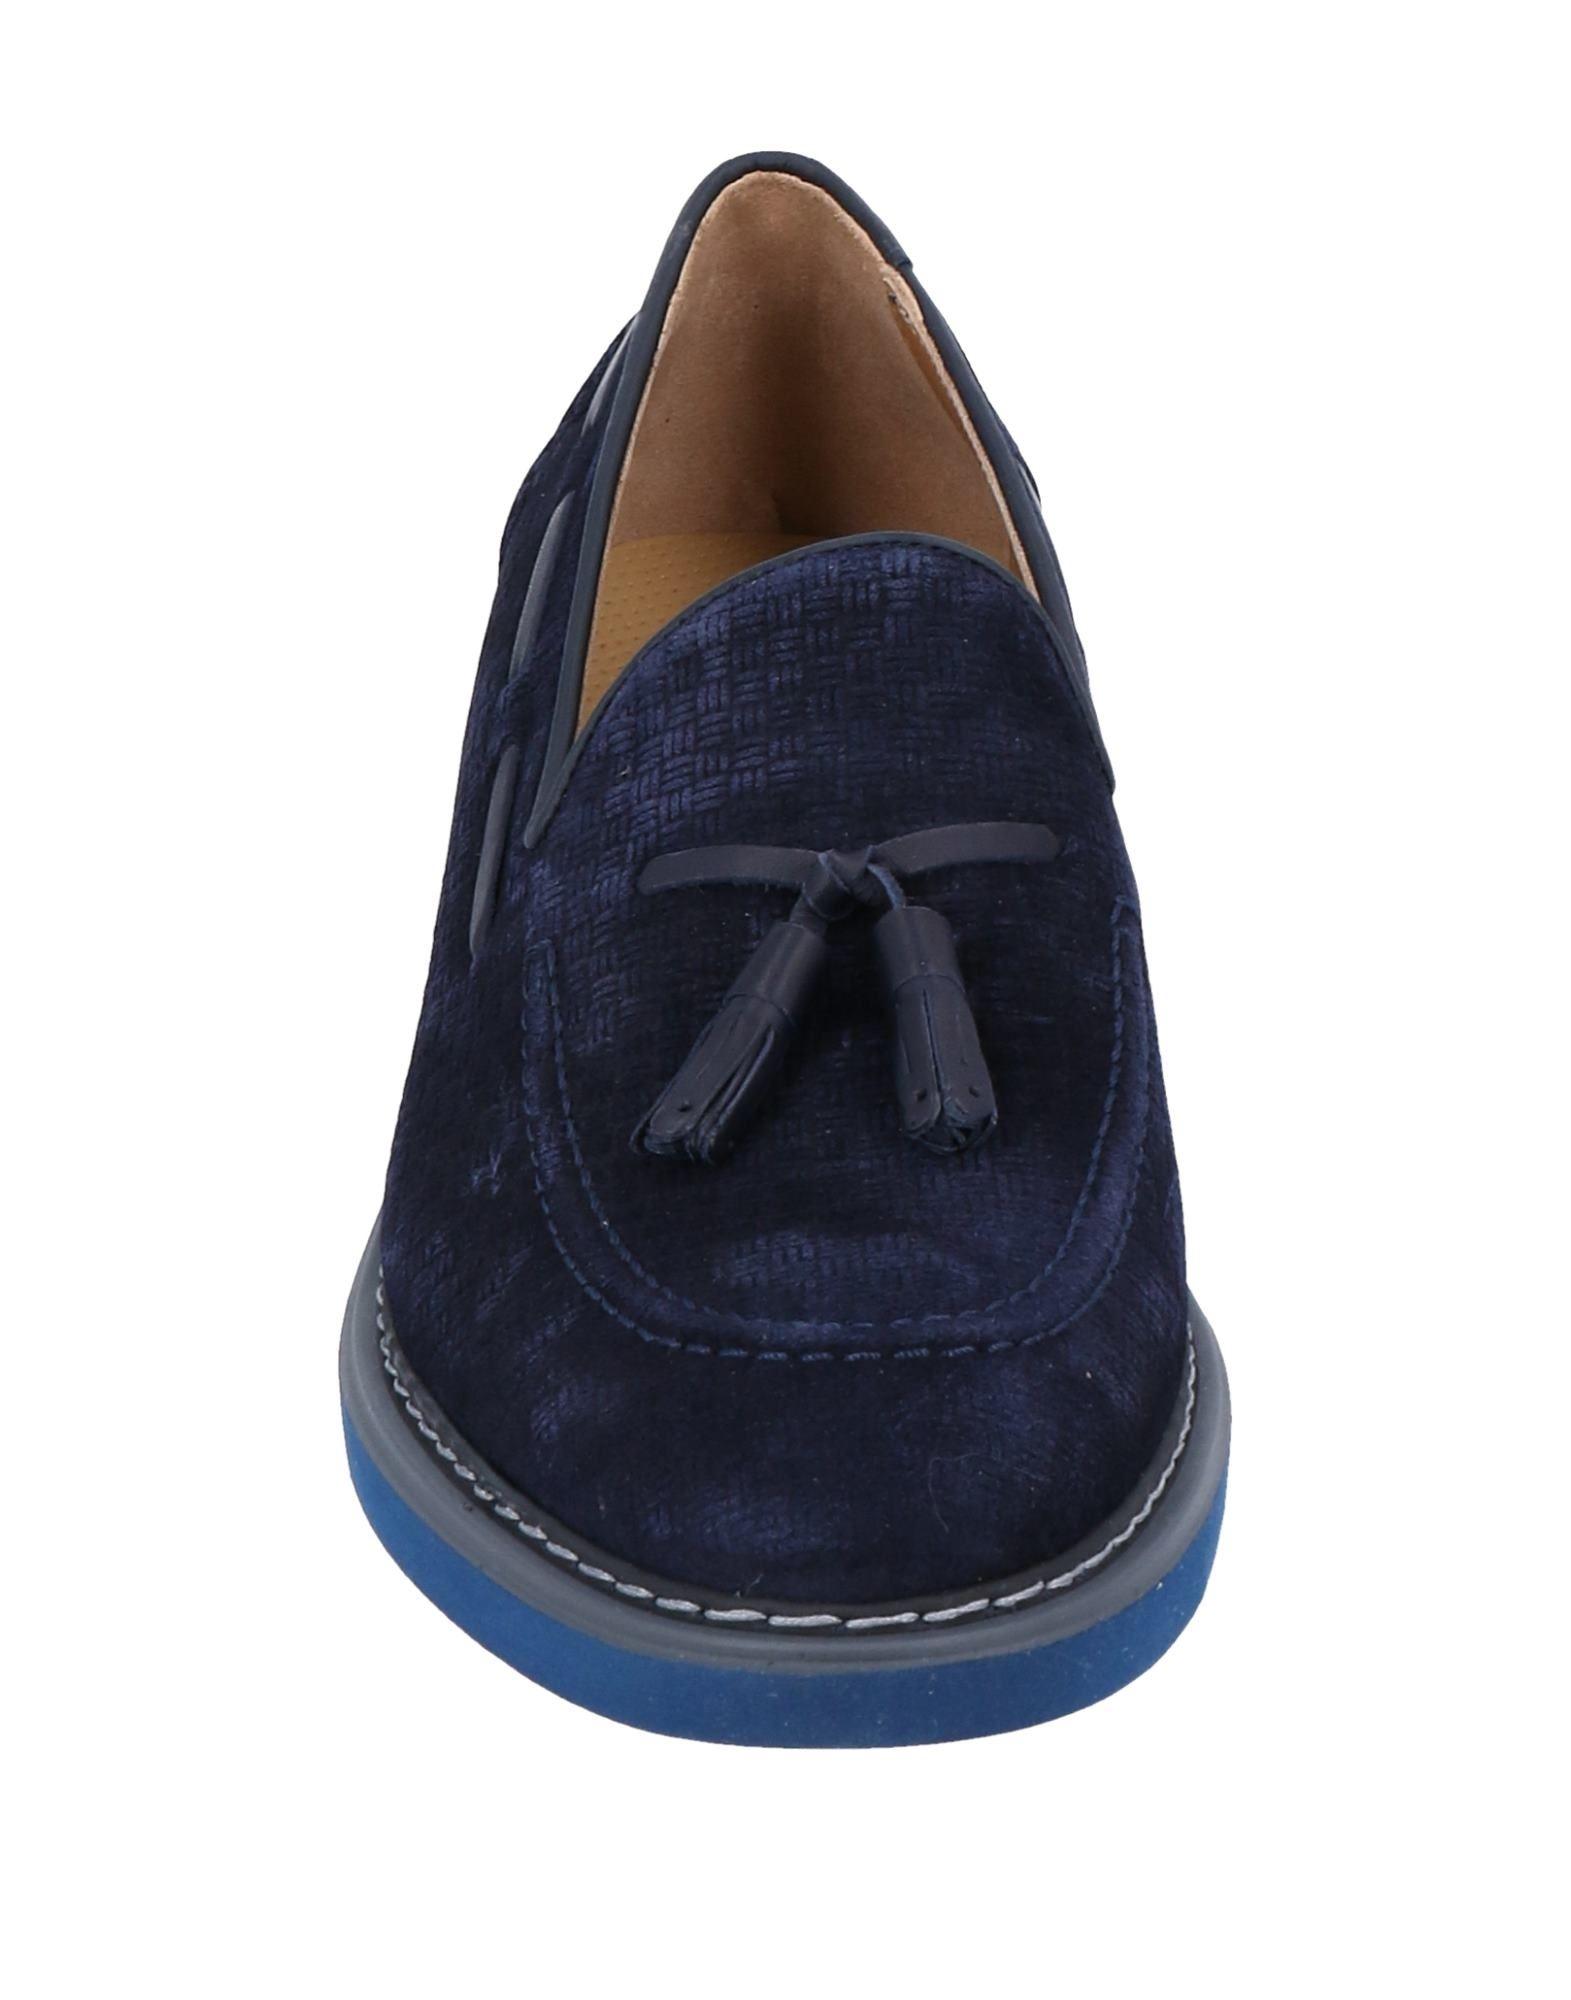 BRIMARTS Loafers-Shoes Mens Suede Blue 